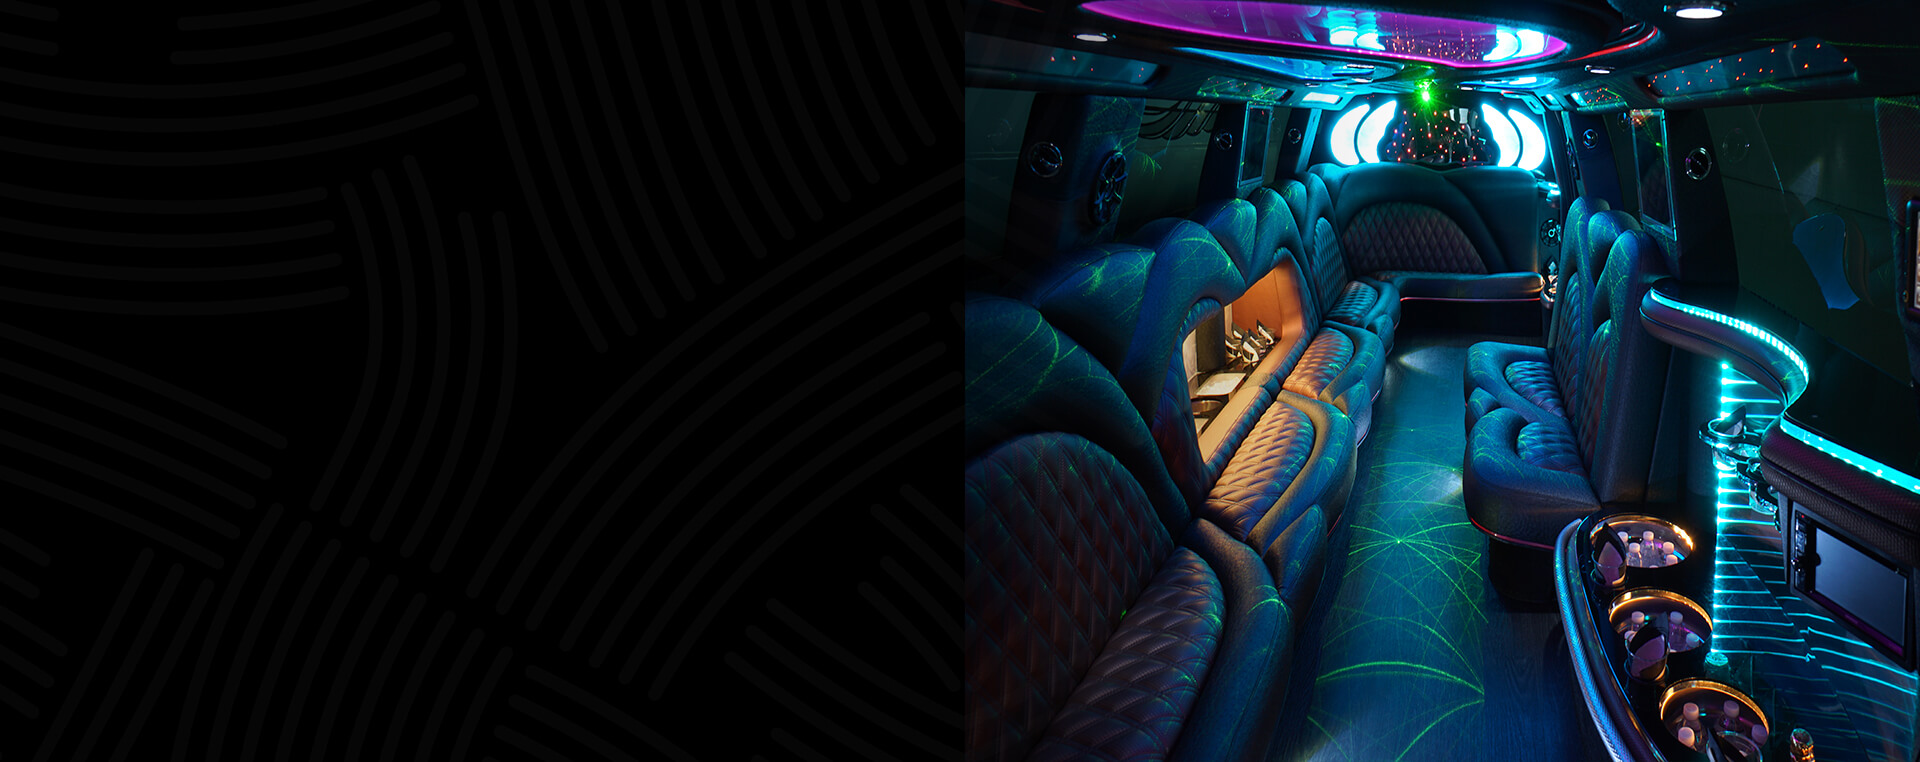 Amazing limo interior